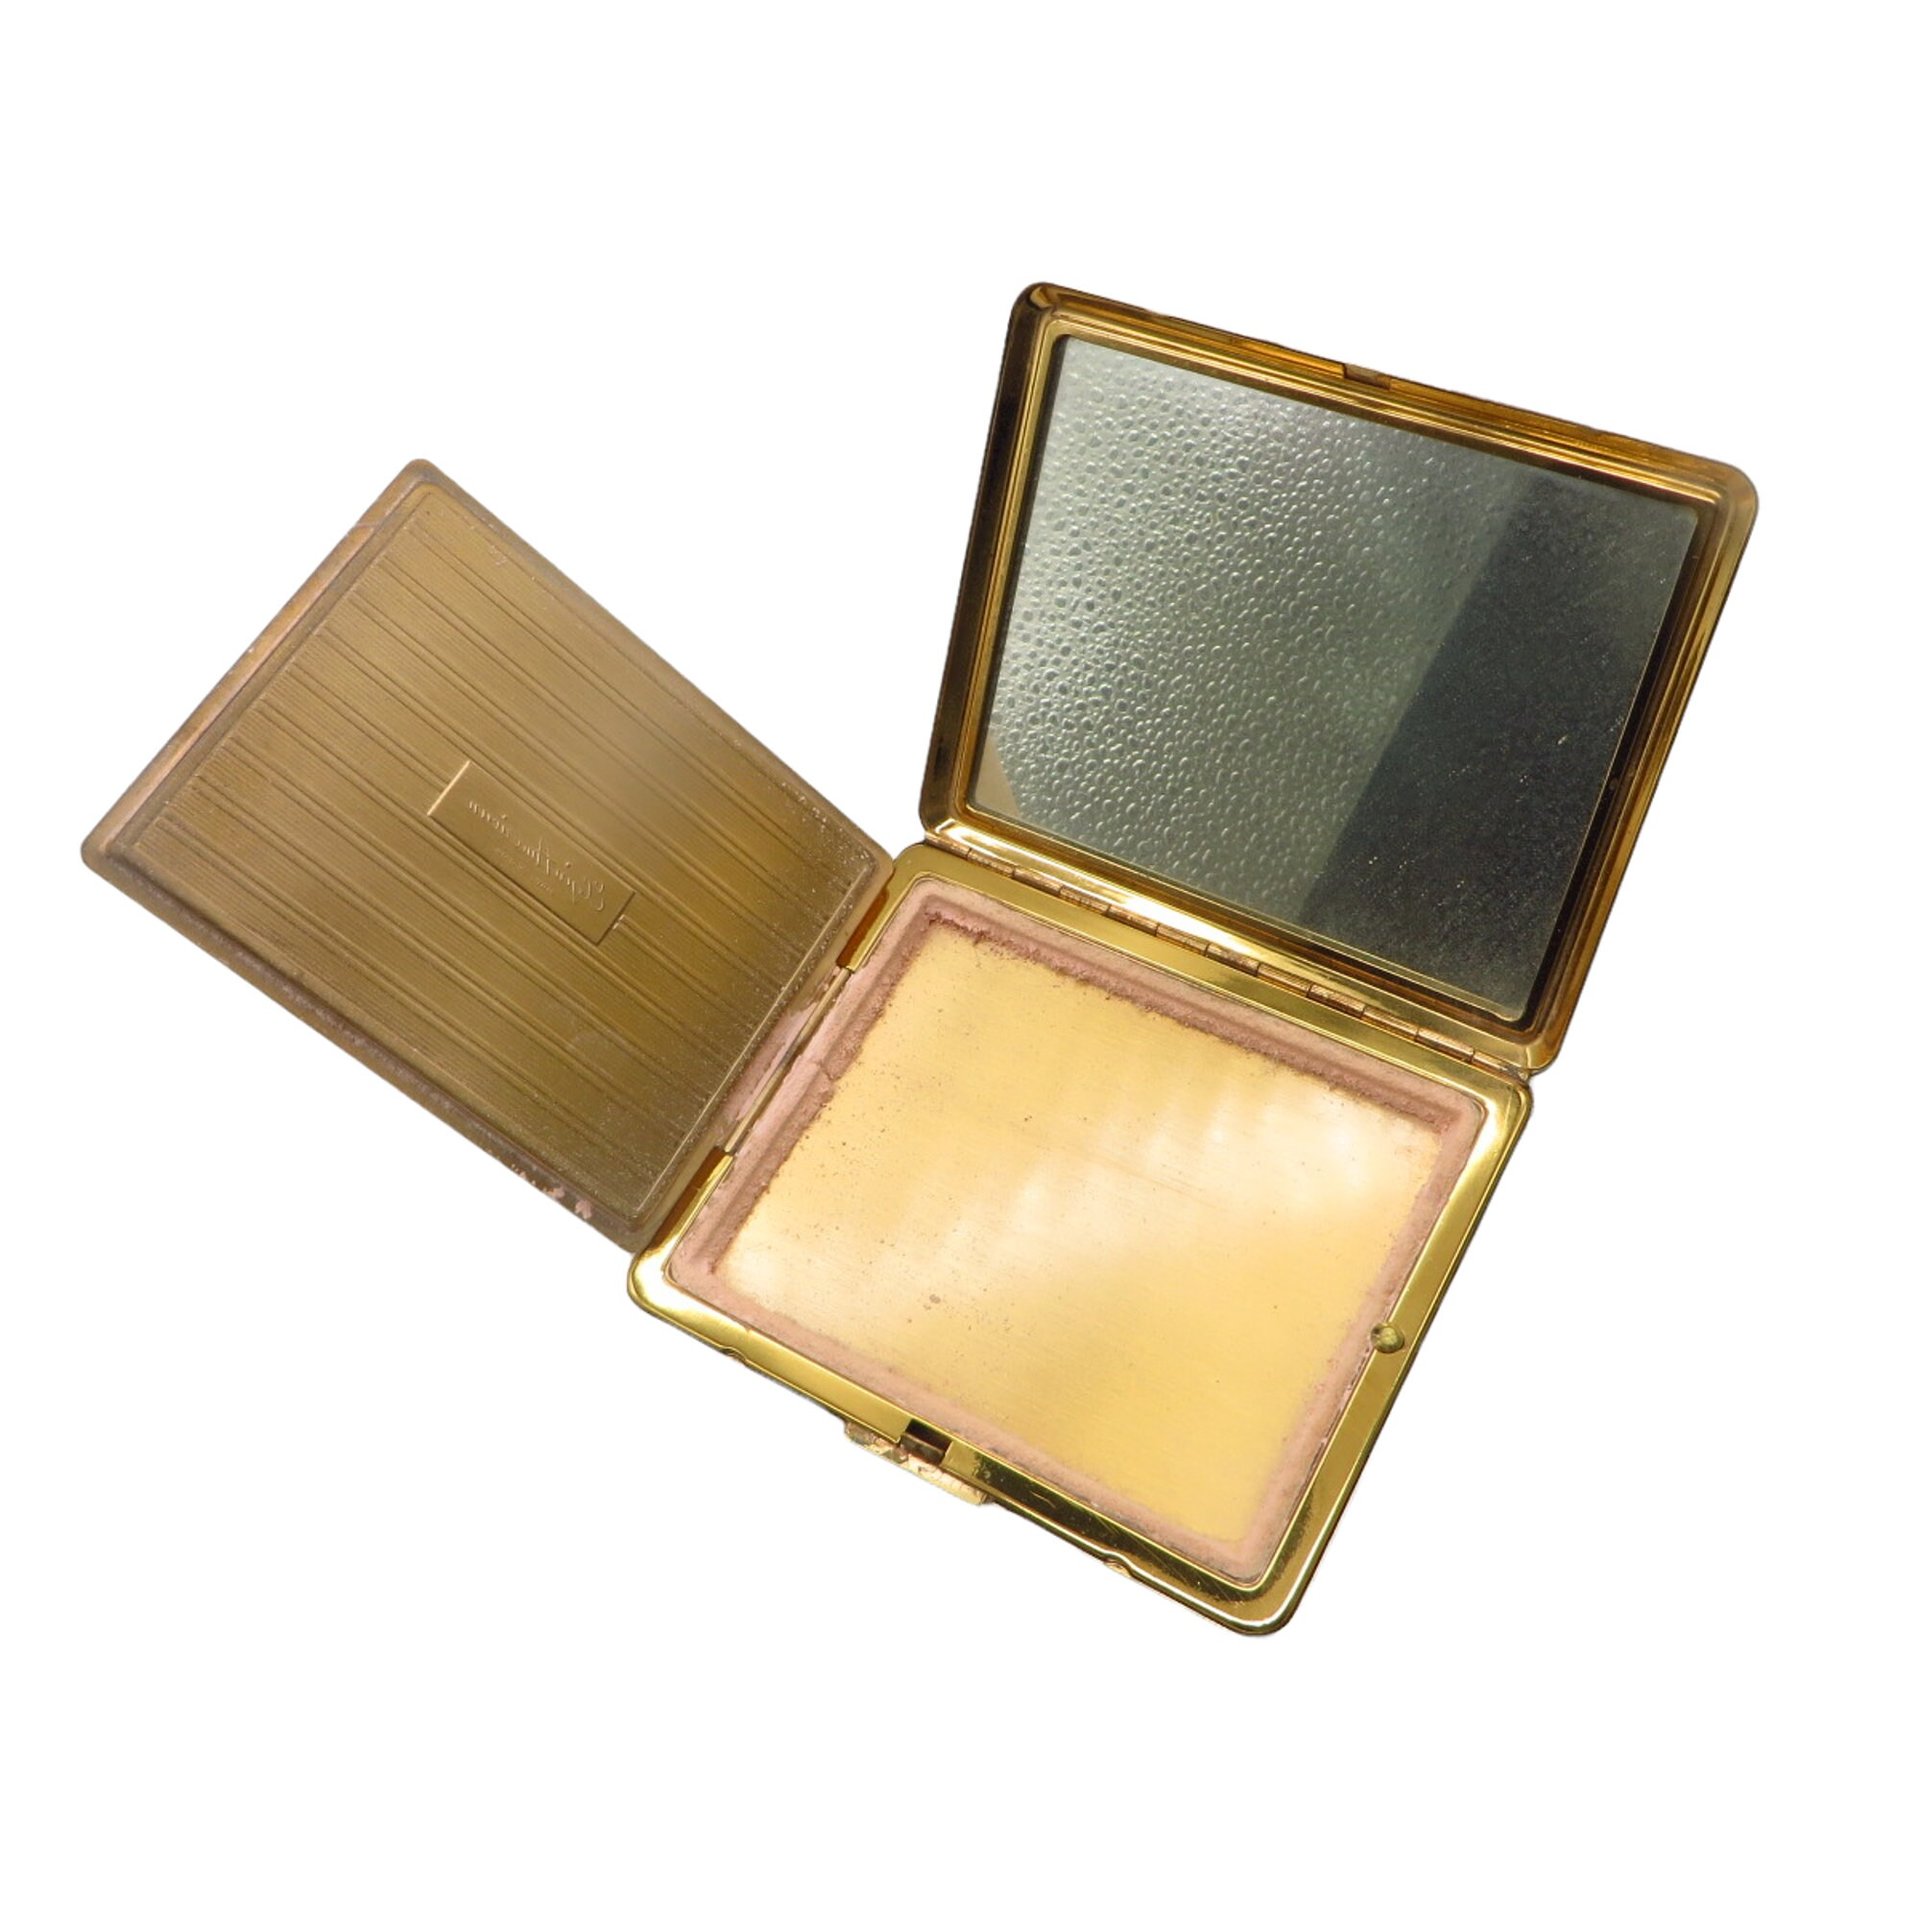 Elgin American Compact, Mid Century Modern, Rare Collectible Makeup Case